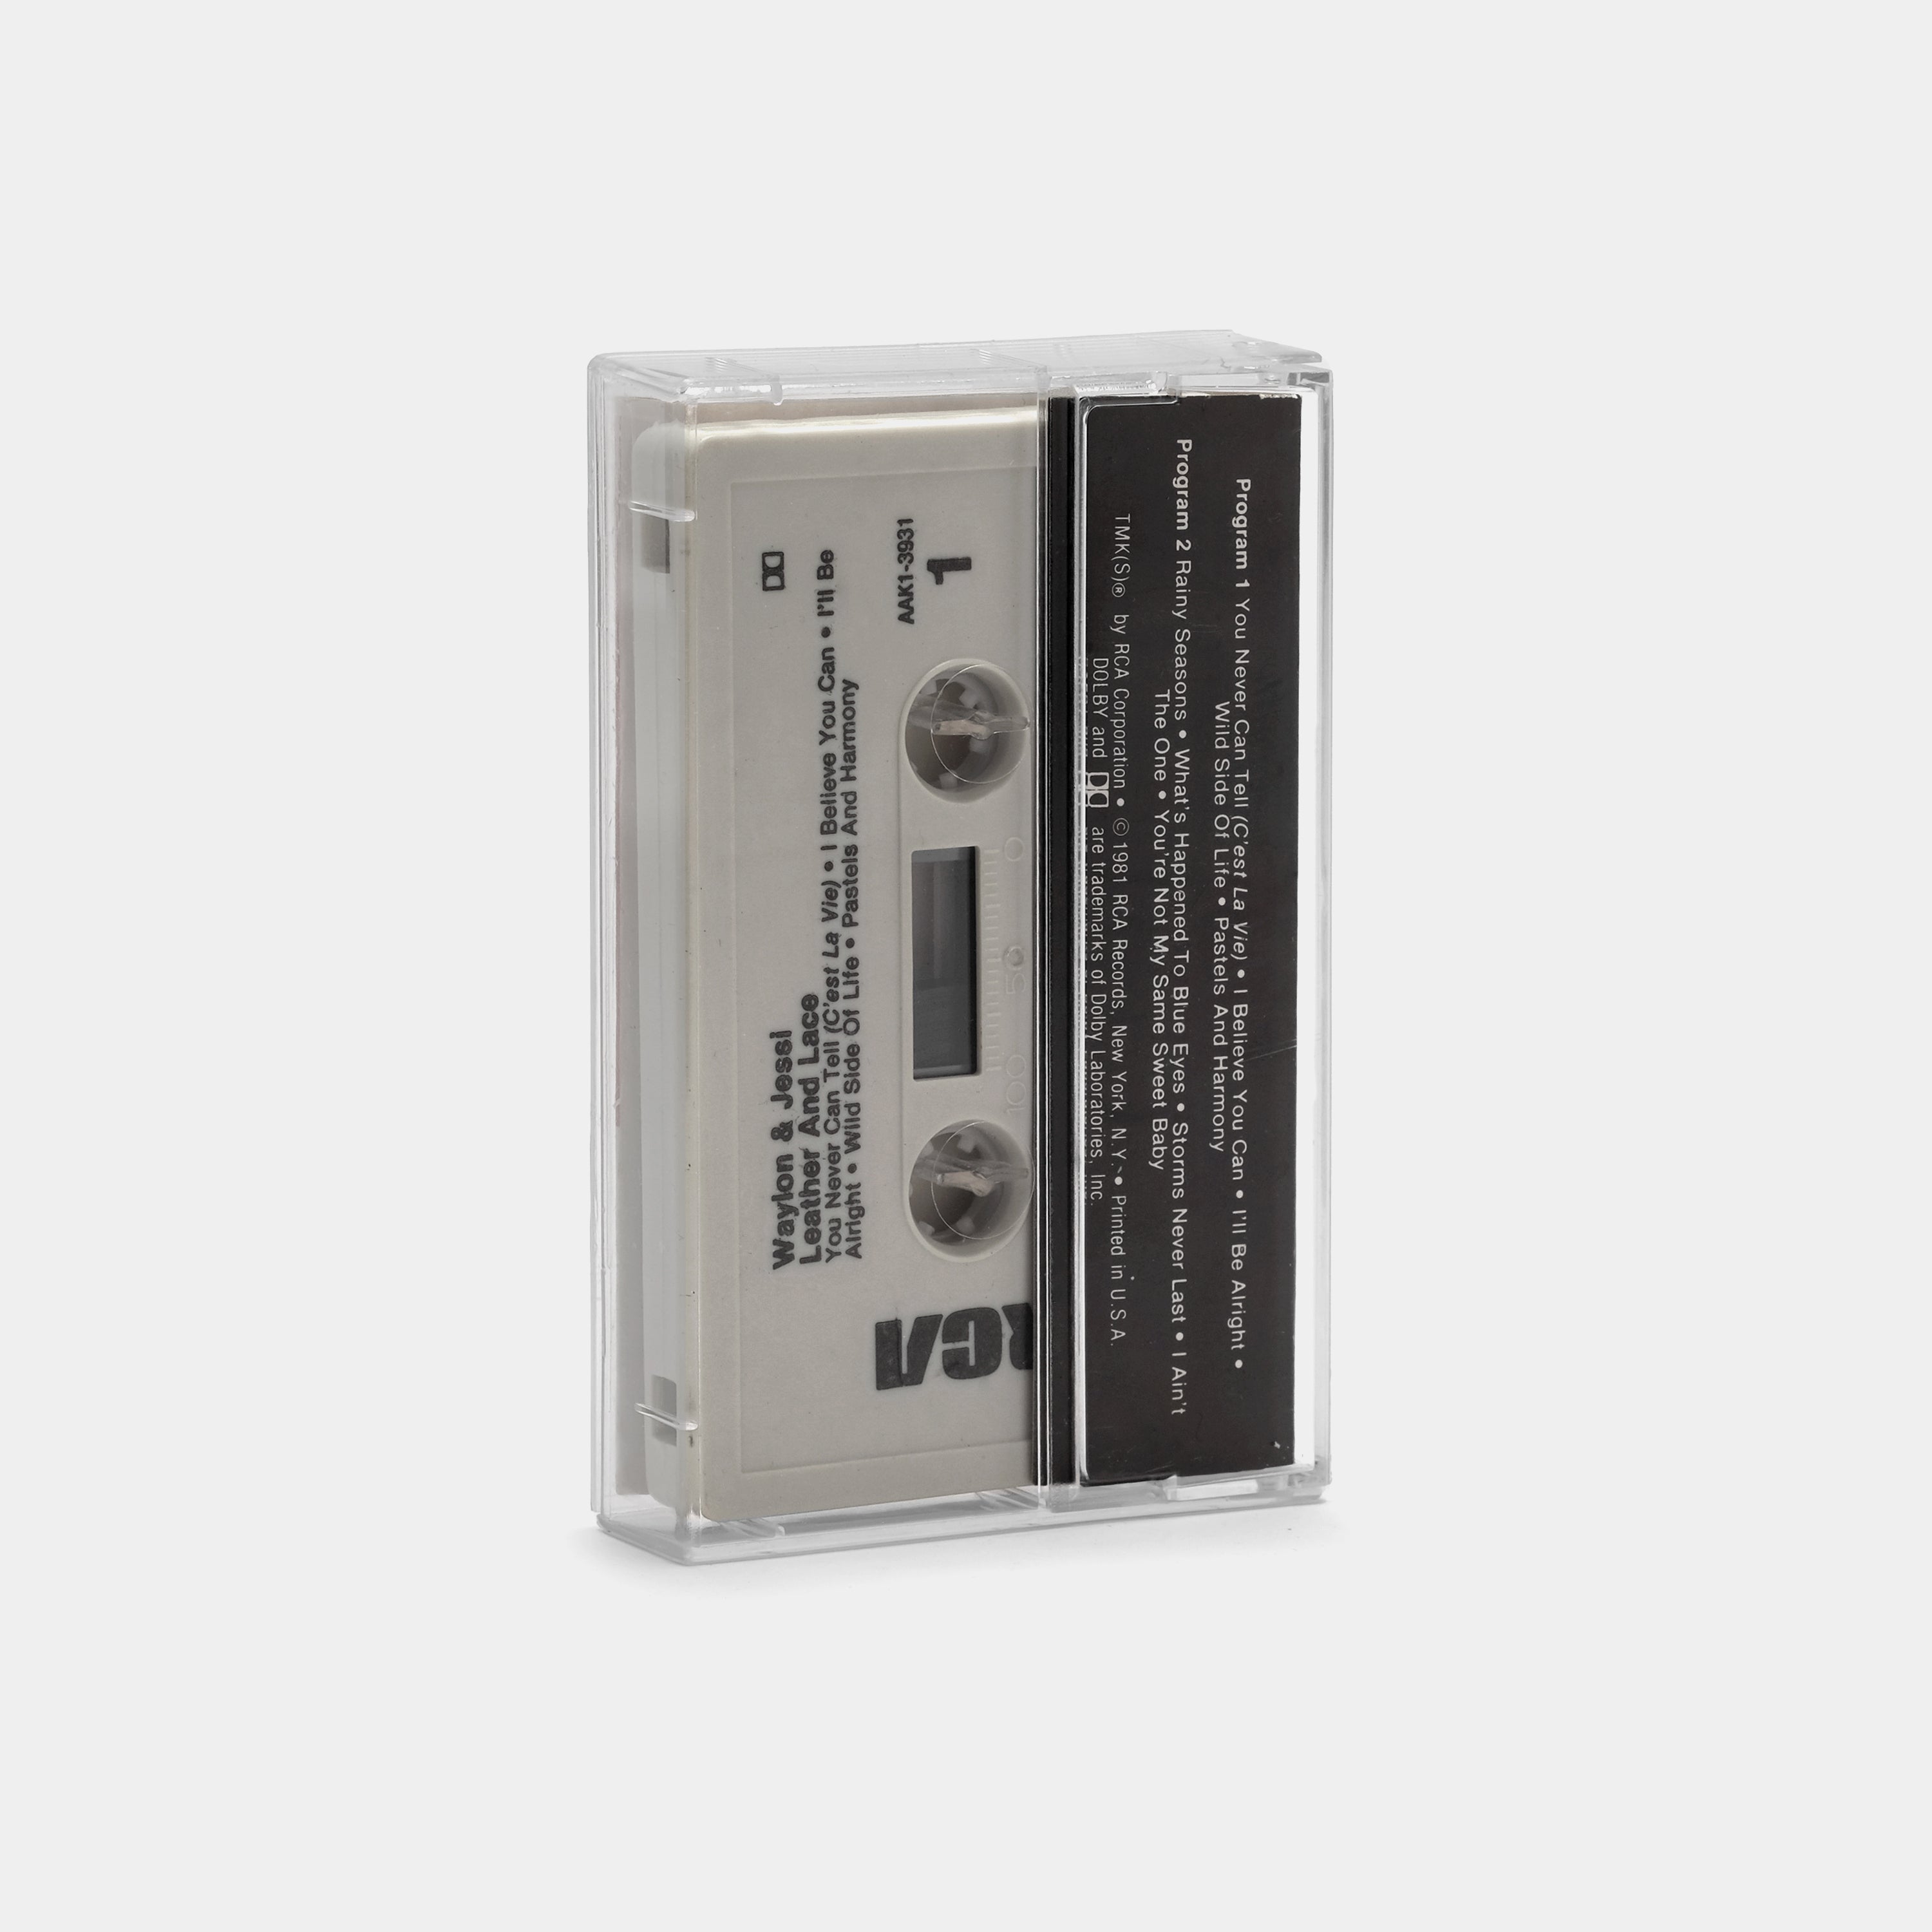 Waylon & Jessi - Leather And Lace Cassette Tape